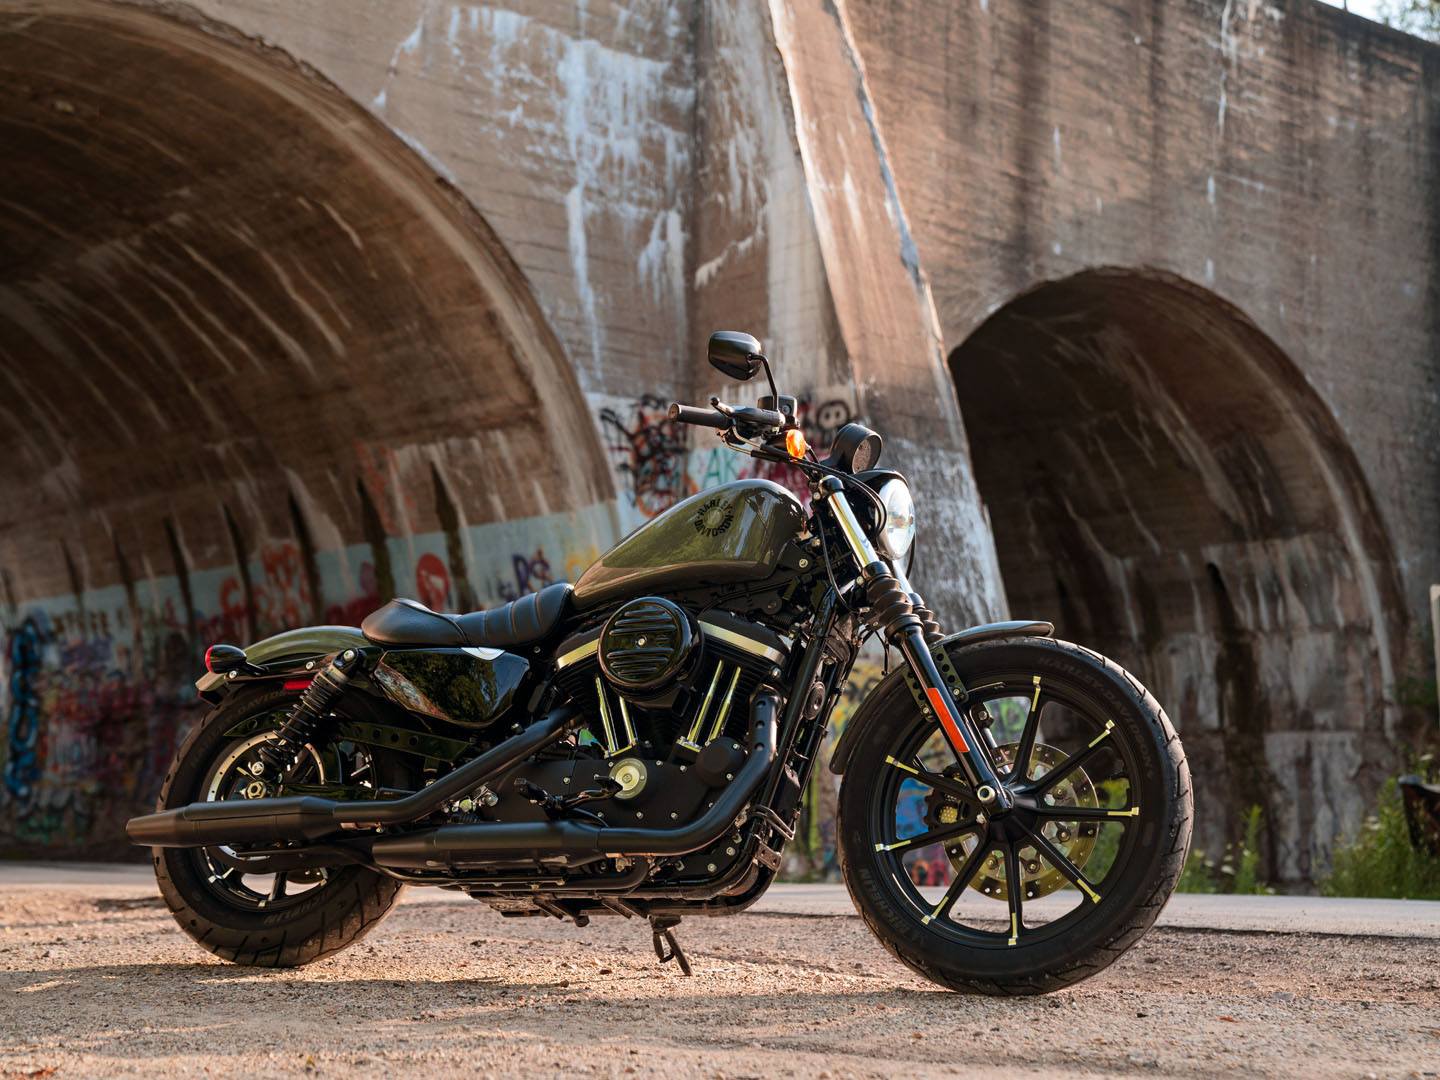 2021 Harley-Davidson Iron 883™ in Winchester, Virginia - Photo 6